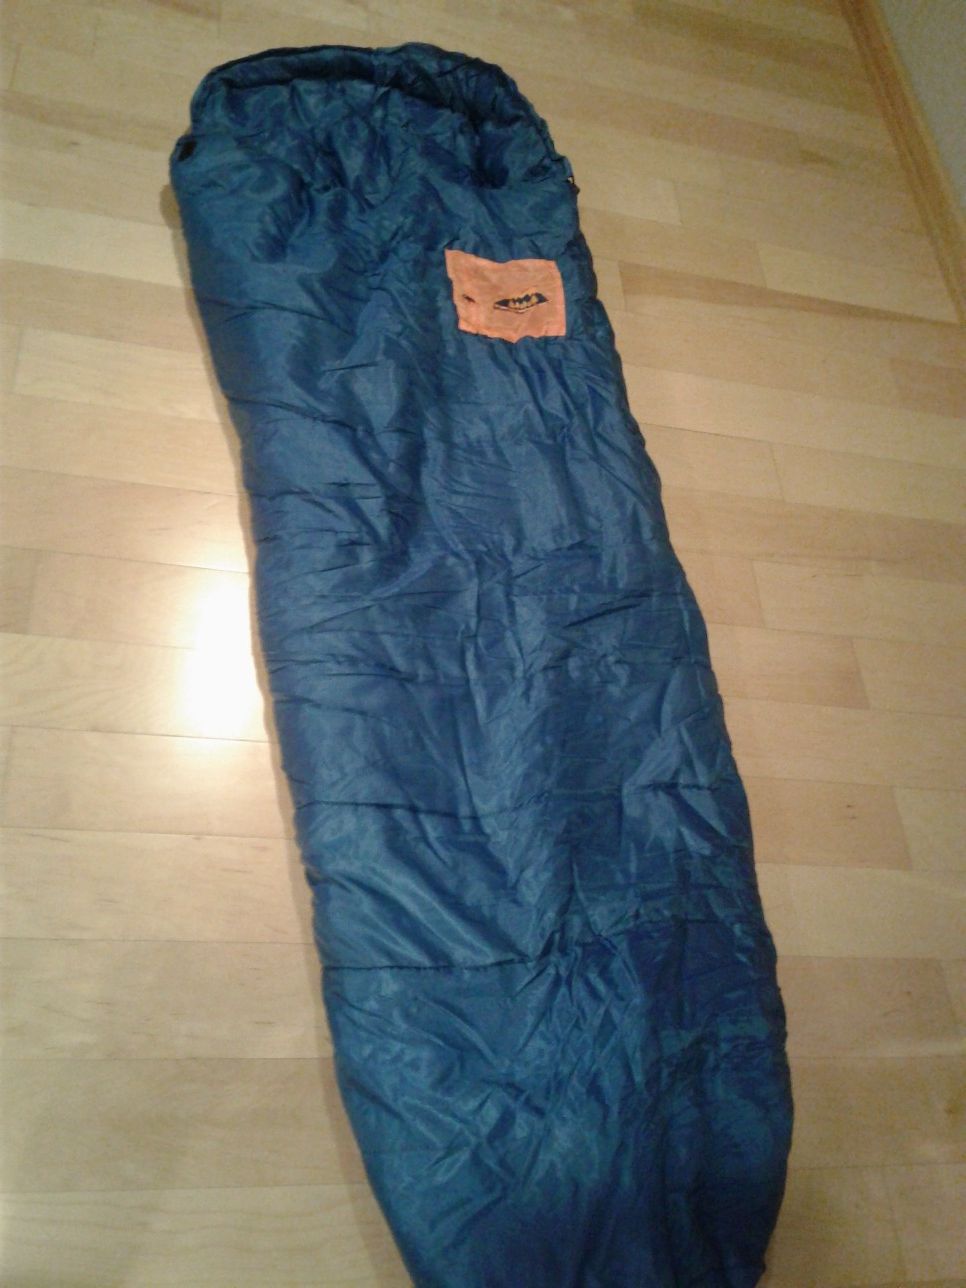 Sleeping bag from REI